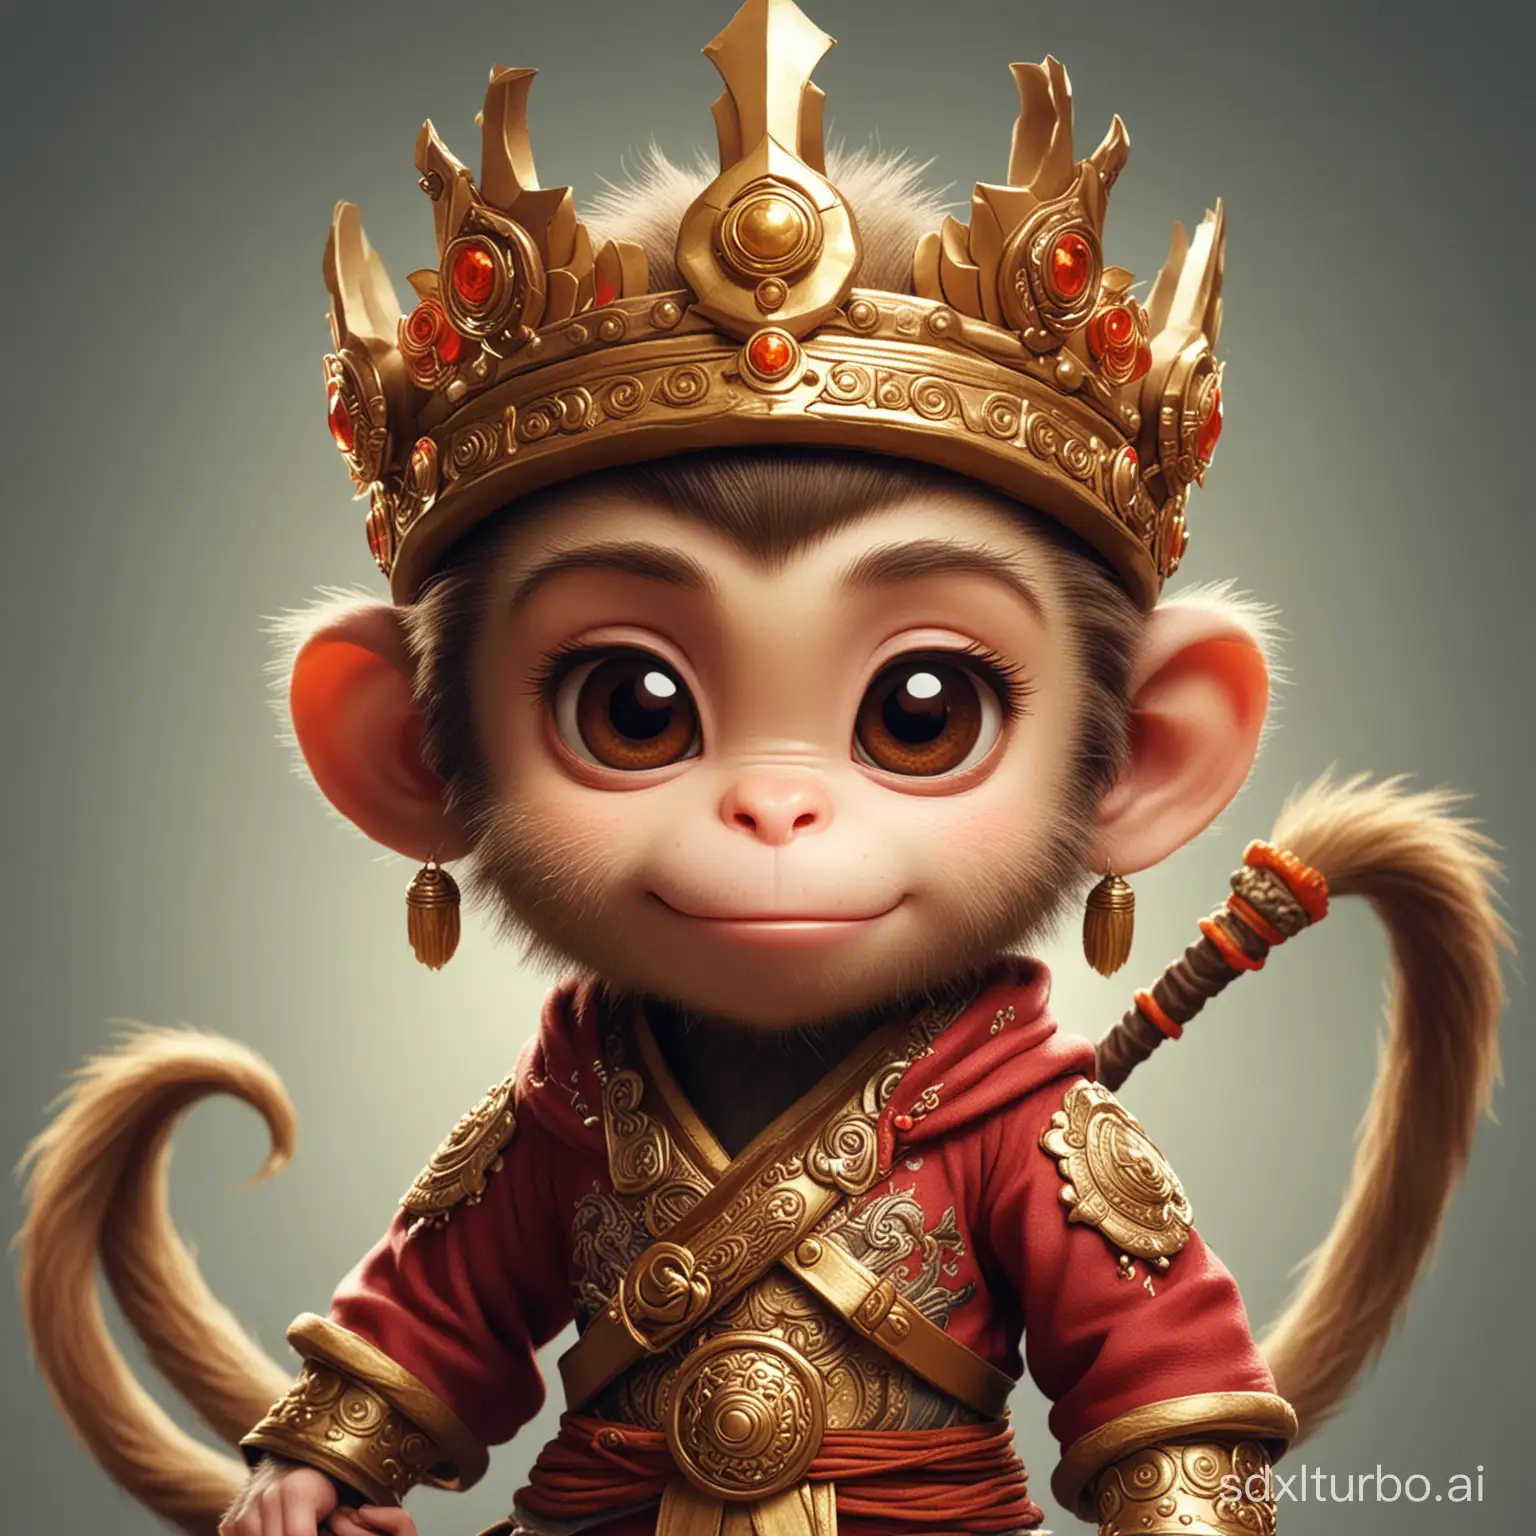 Cute Monkey King image